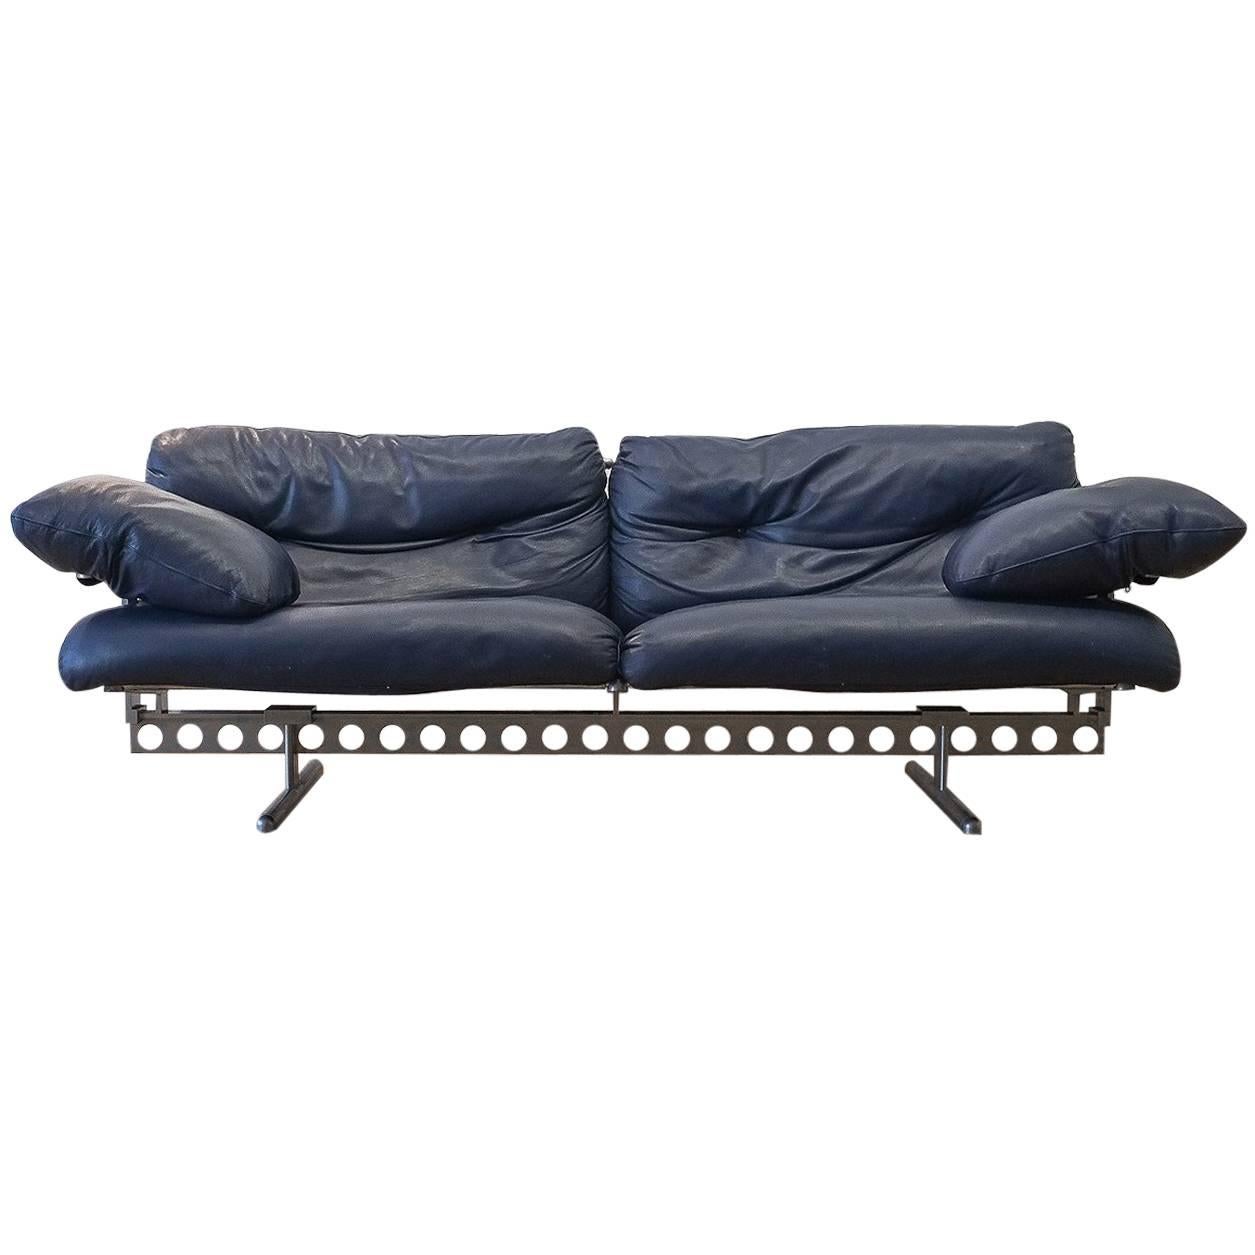 Pierluigi Cerri Ouverture Leather Sofa for Poltrona Frau, Italy, 1980